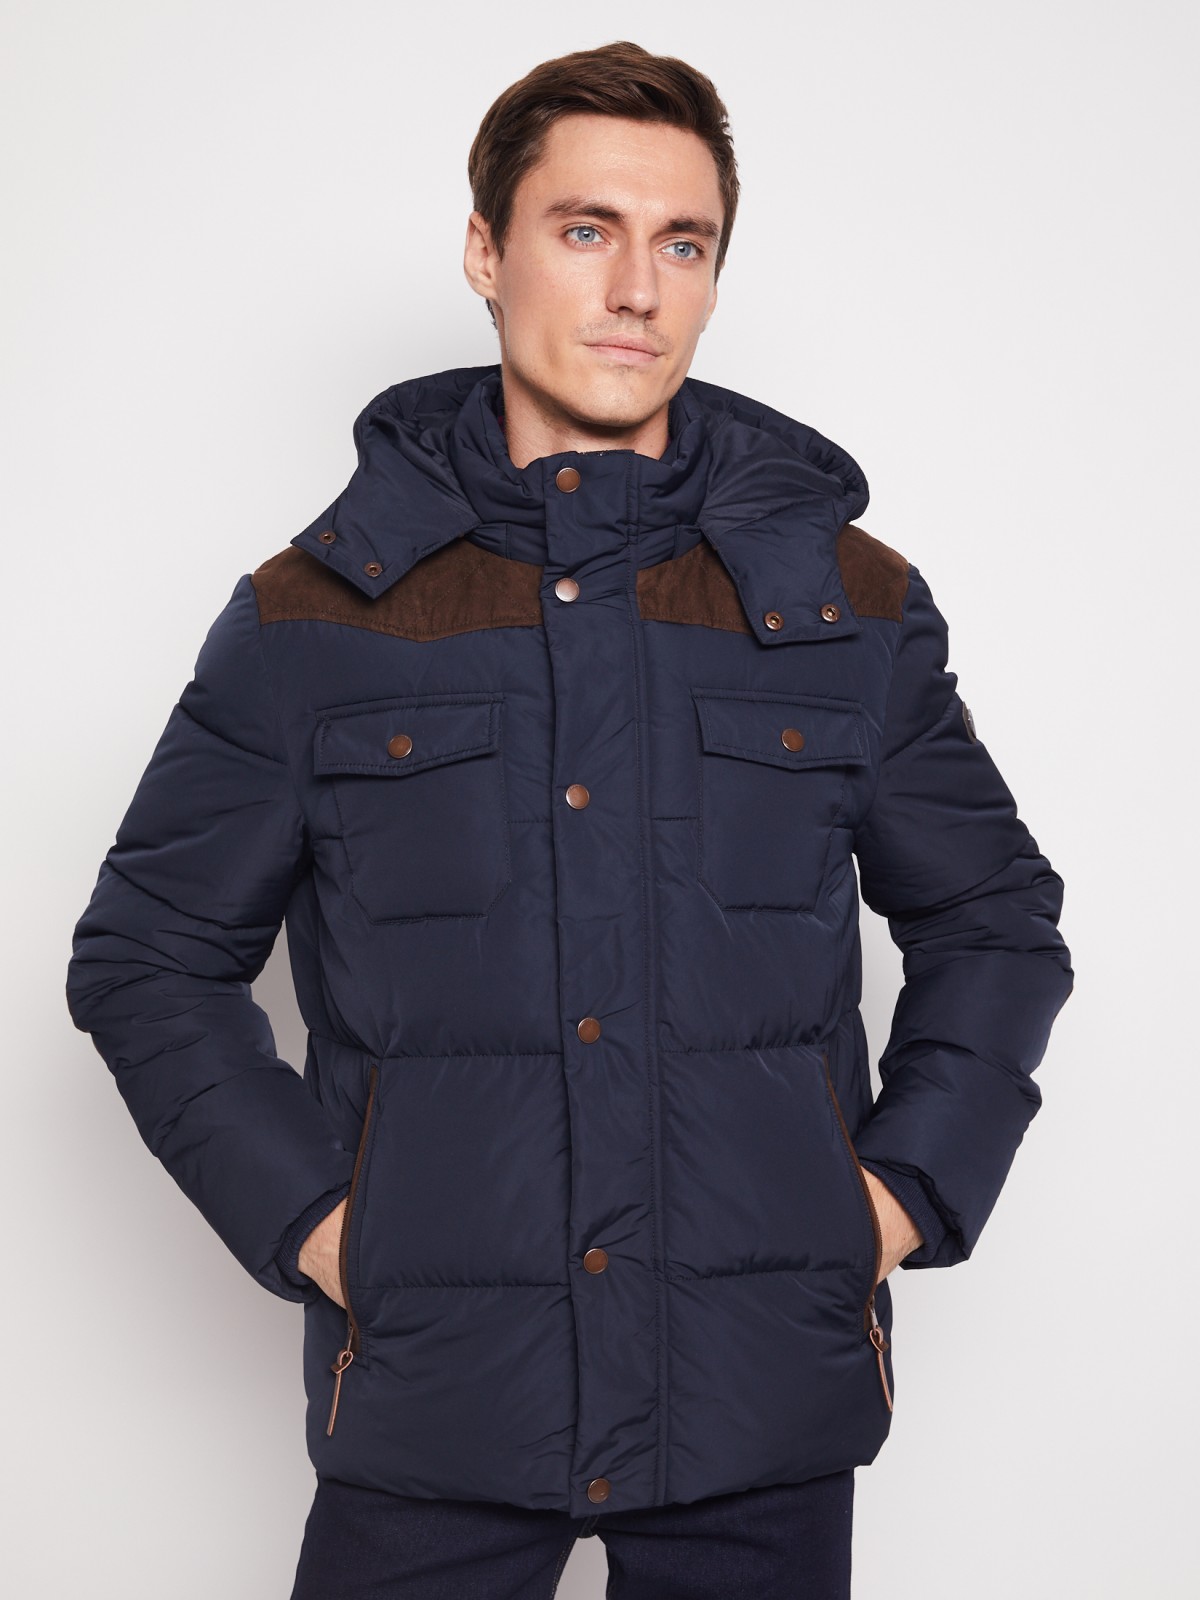 Утеплённая стёганая куртка zolla 010345123094, цвет синий, размер S - фото 2